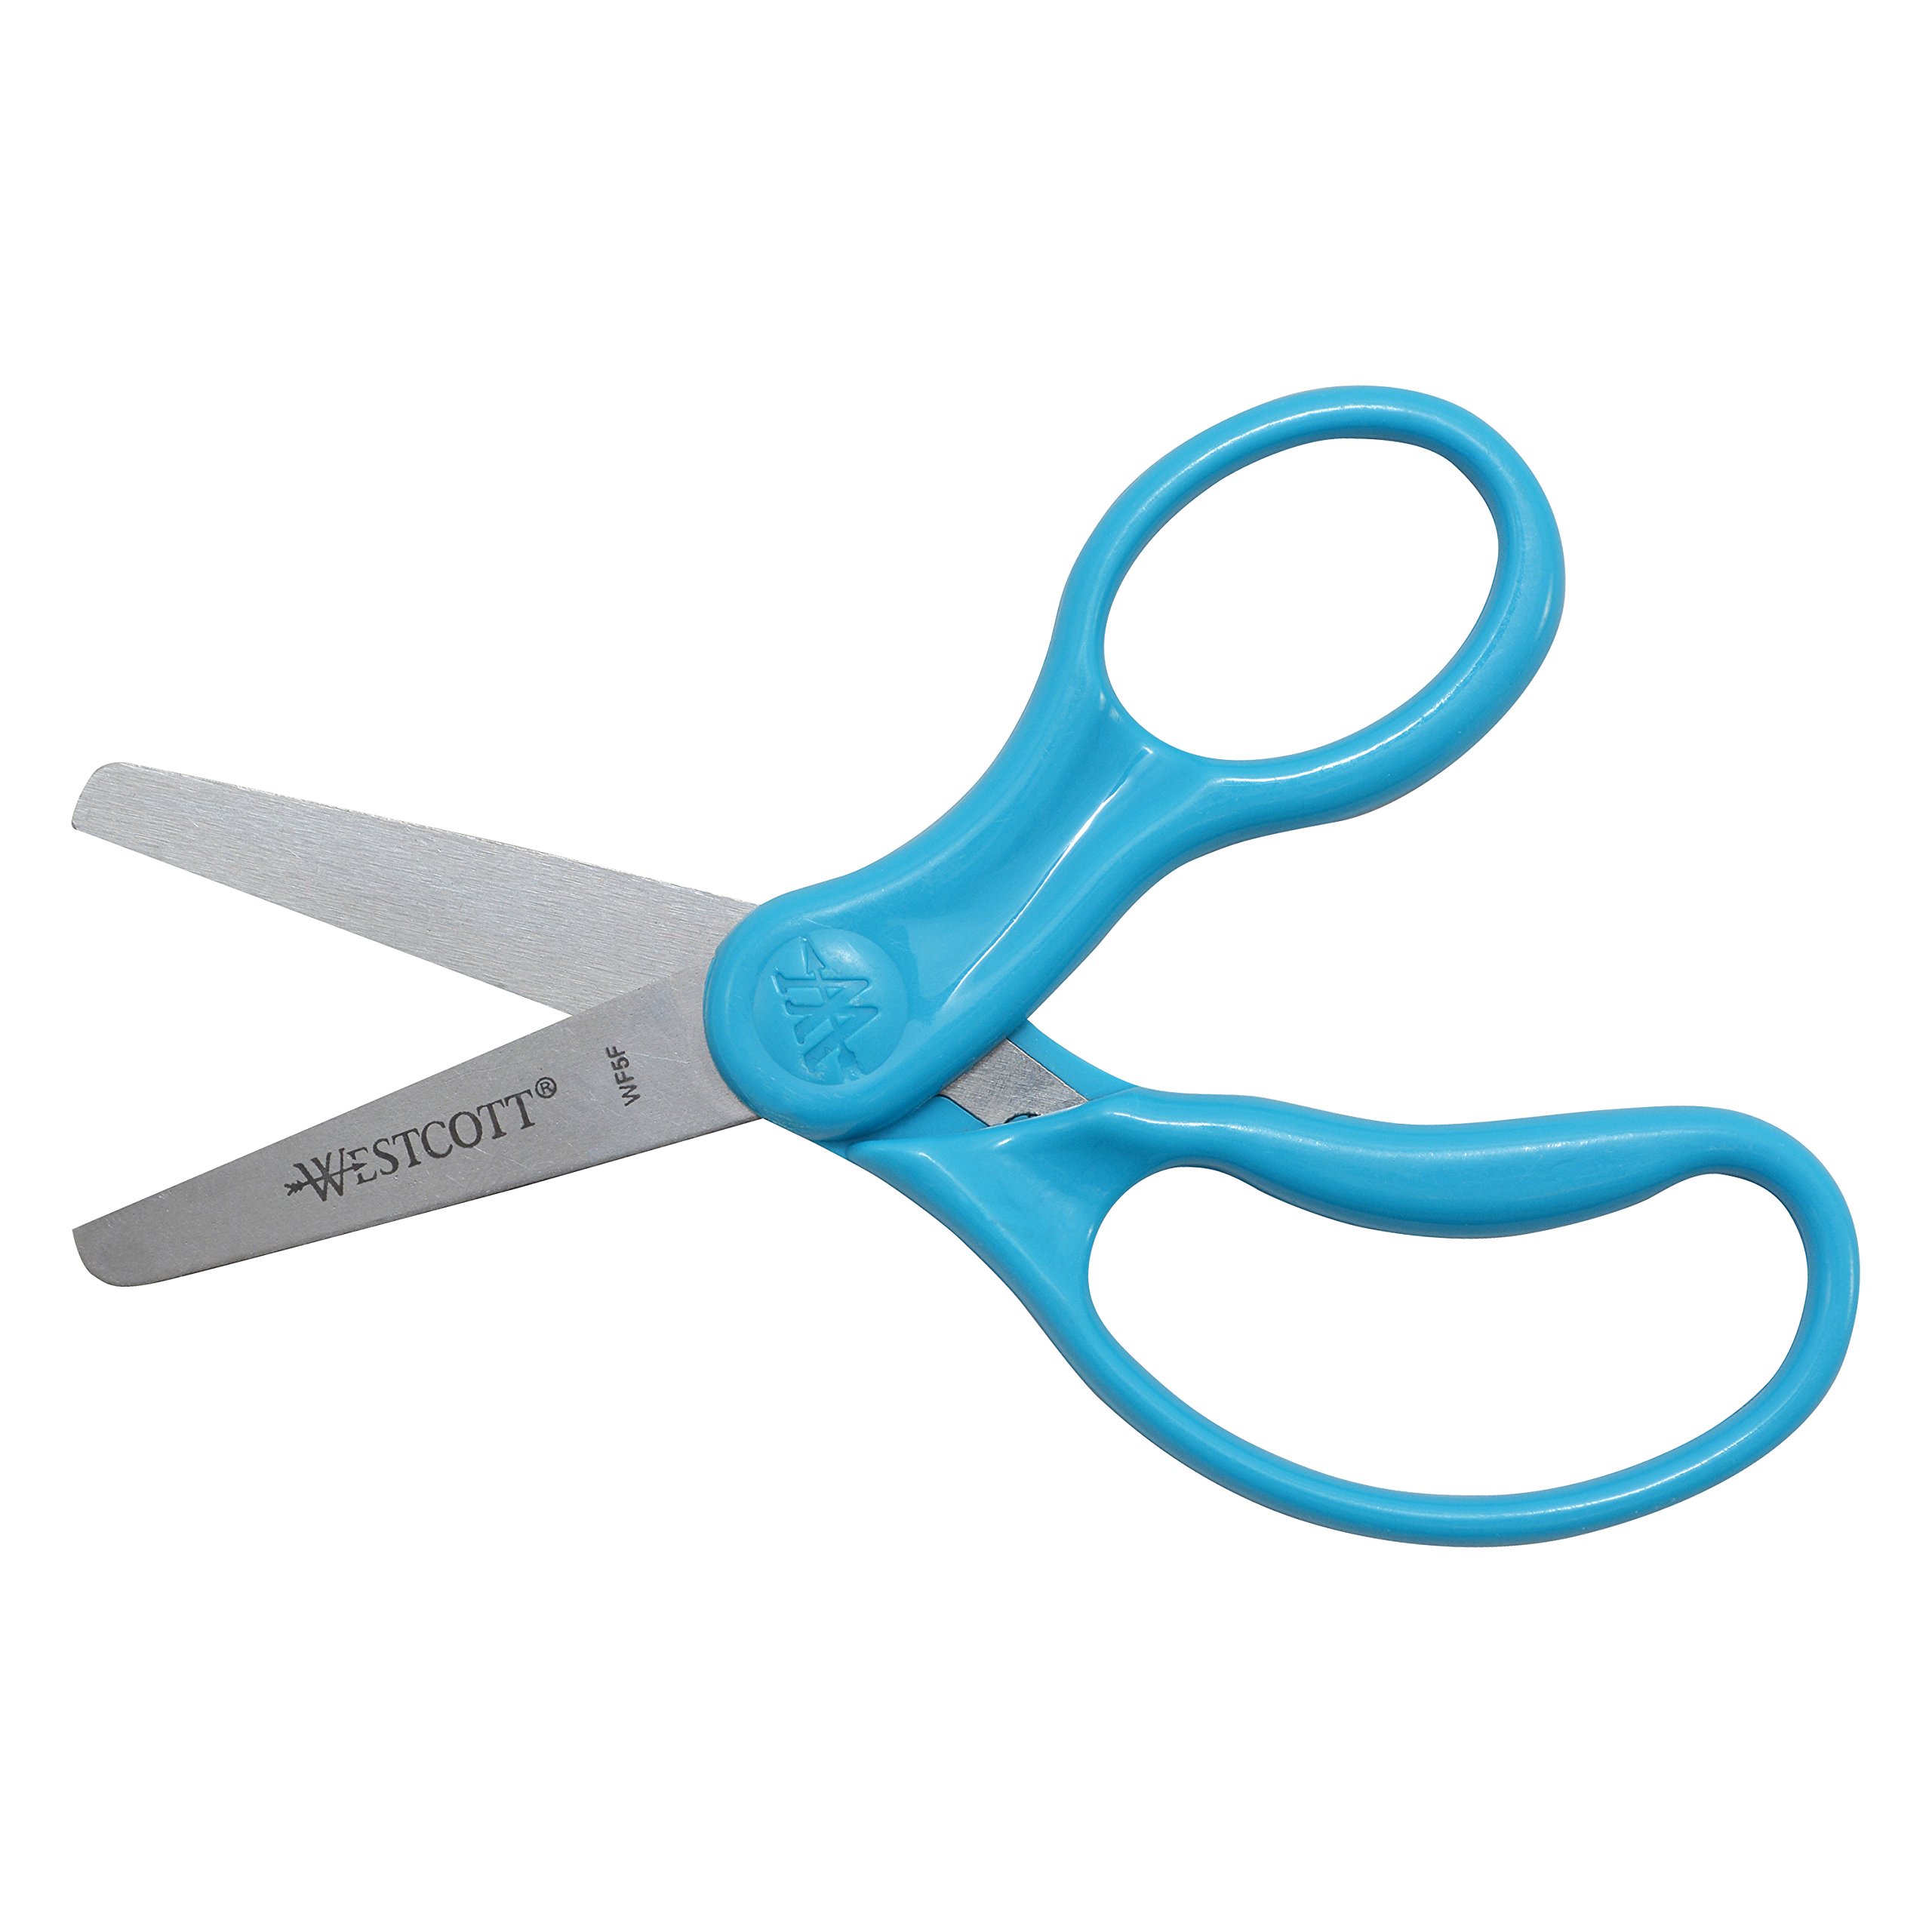 Westcott 15968 Right-Handed Scissors, Kids' Scissors, Ages 4-8, 5-Inch Blunt Tip, Blue